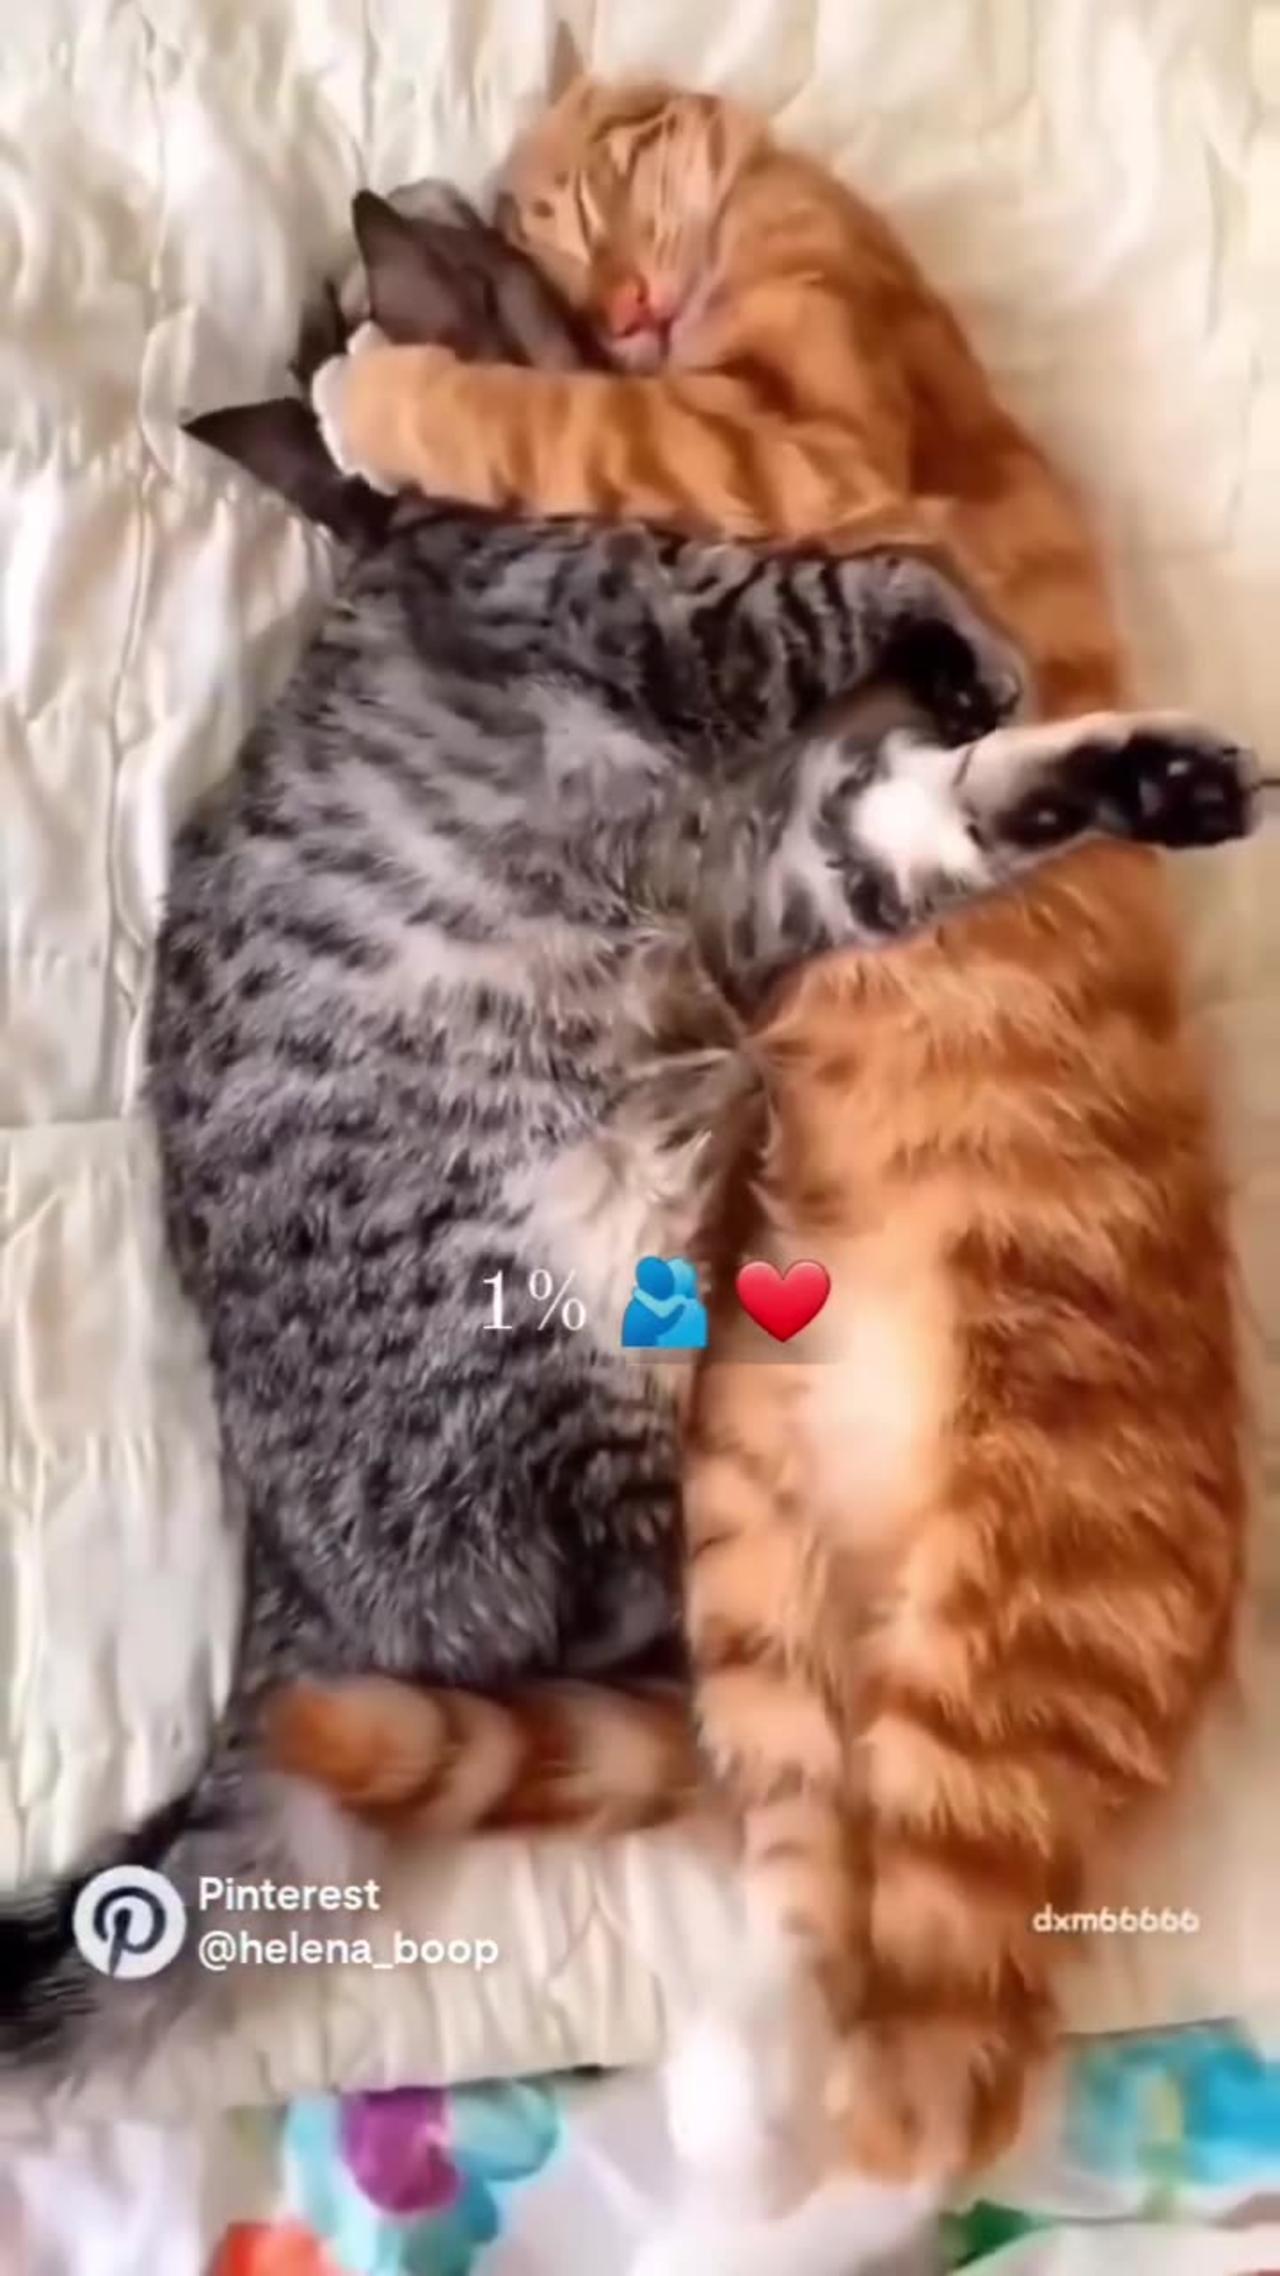 Cat's love video